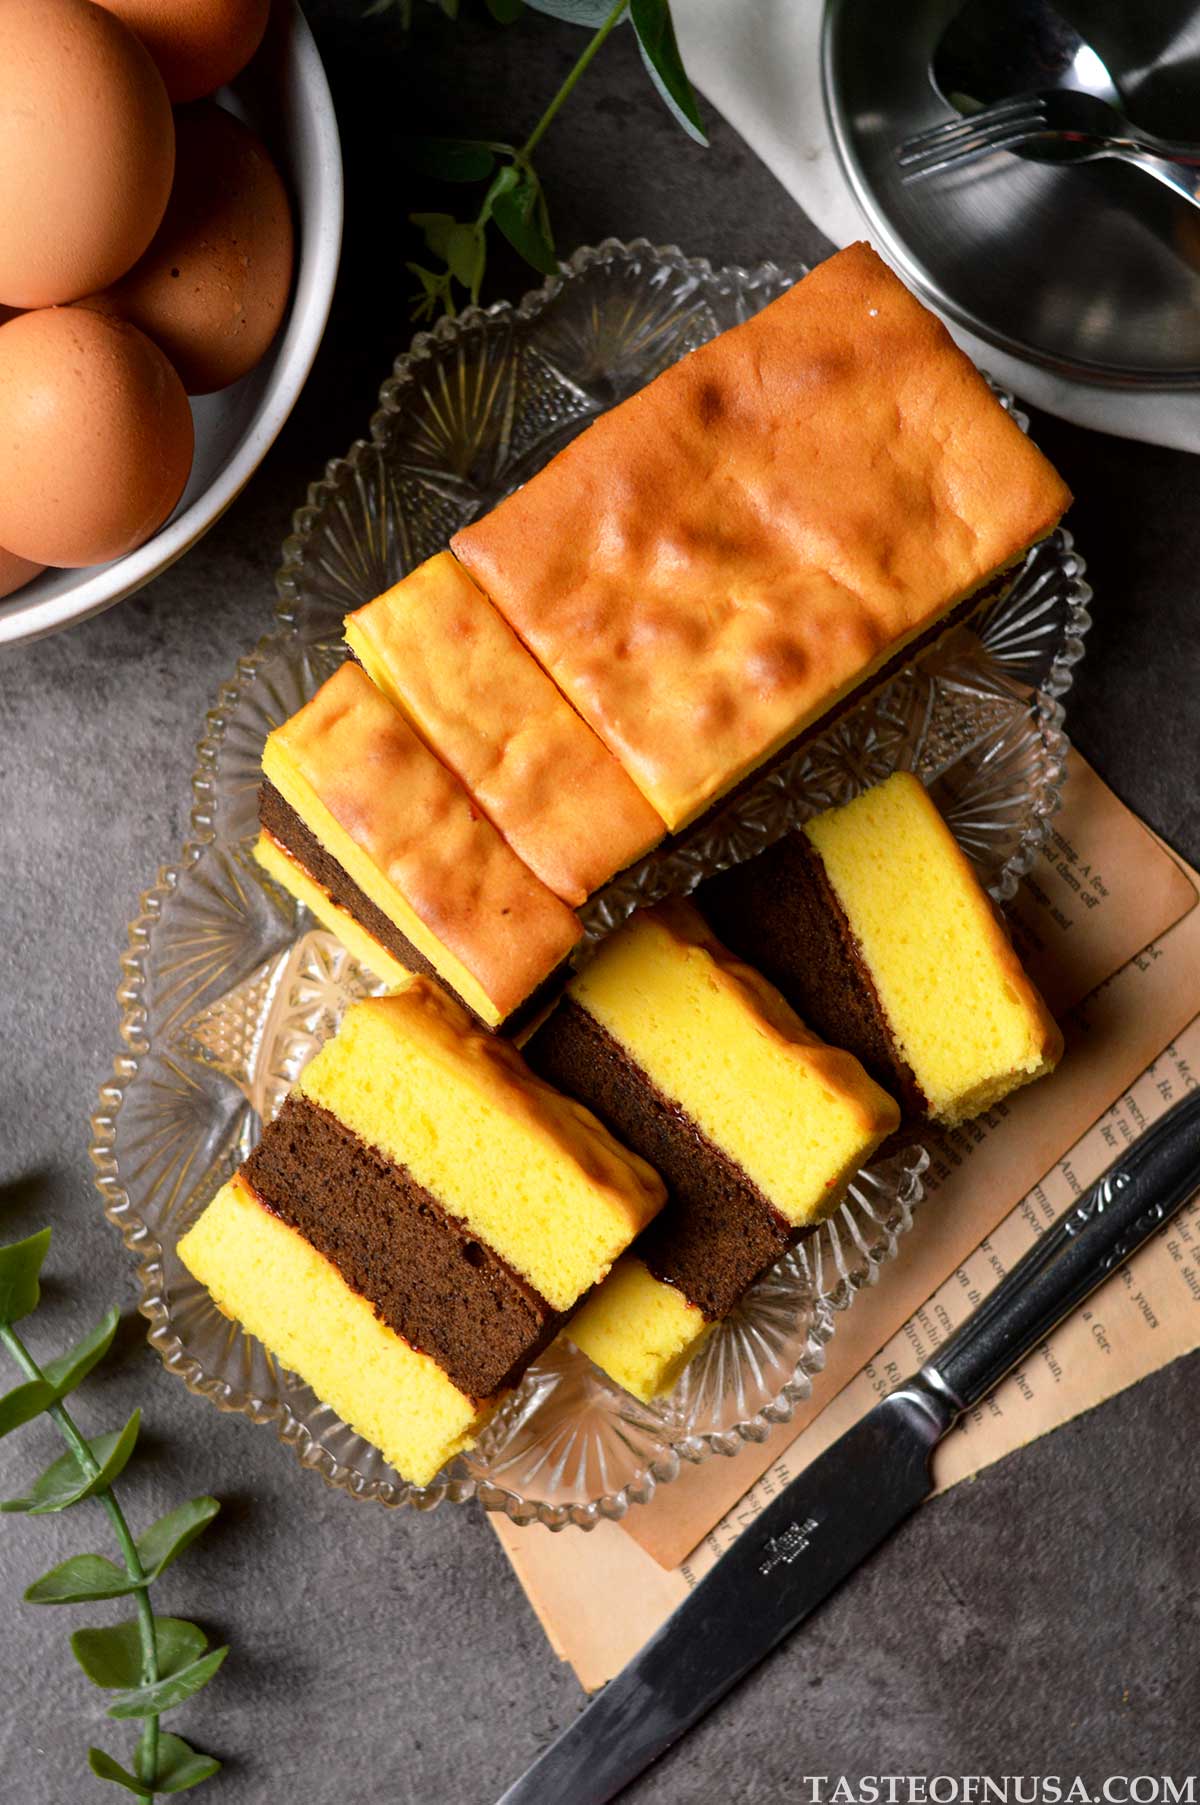 kue lapis surabaya or surabaya layer cake or spikoe is indonesian sponge cake that consists of a layer of chocolate cake sandwiched between 2 layers of vanilla cake